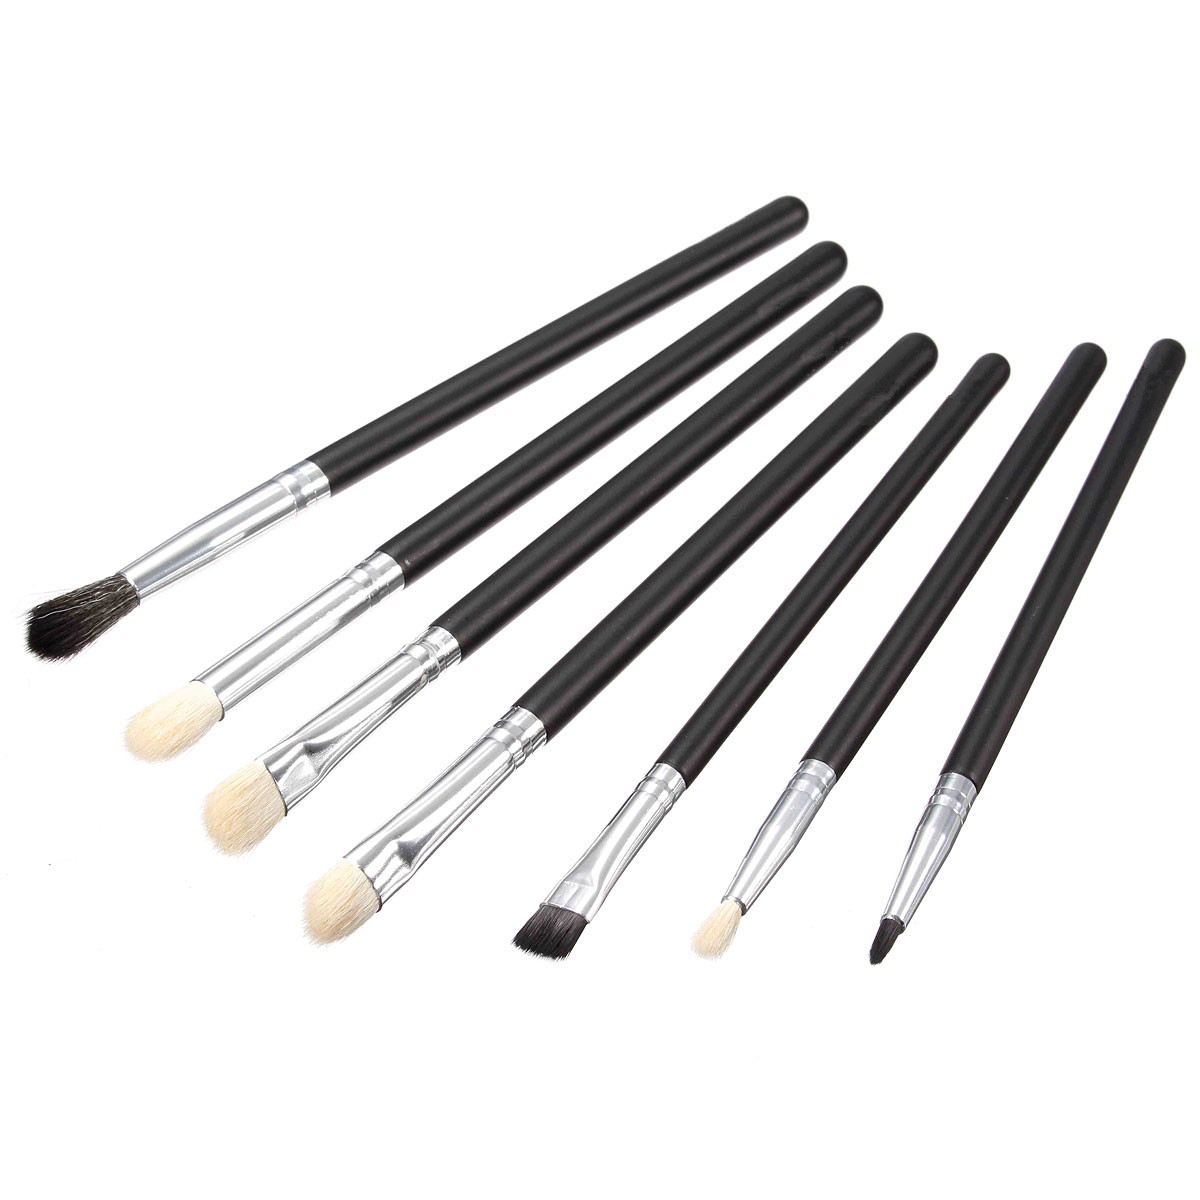 7pcs-Eye-Shadow-Powder-Brush-Shaping-Accurate-Eyeliner-Brow-Makeup-Brush-Cosmetics-Tools-Kit-1159391